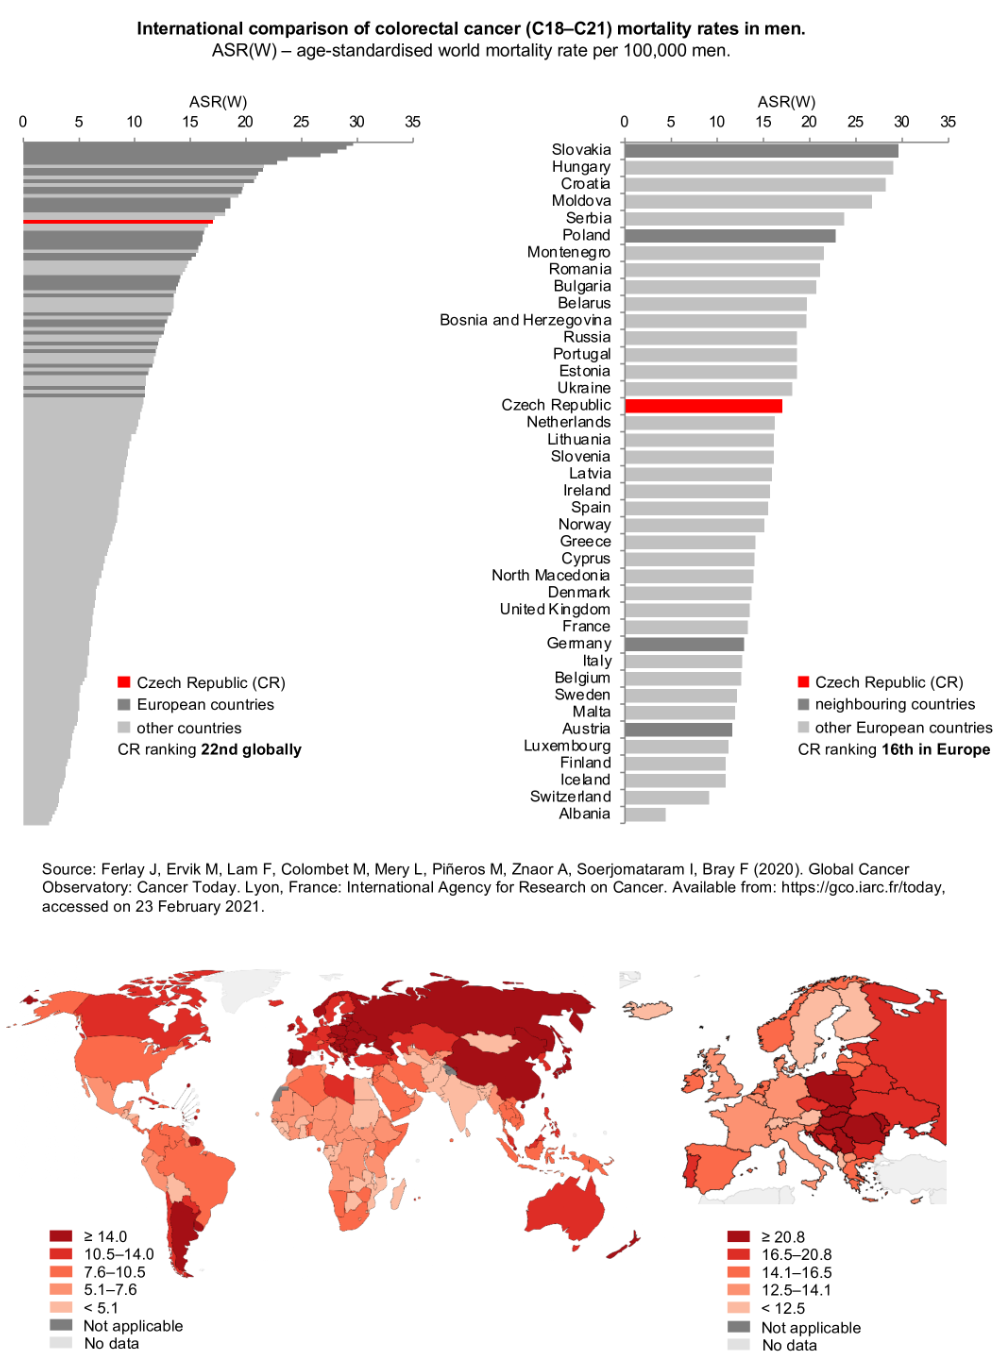 Figure 2b: International comparison of colorectal cancer mortality rates – men. ASR(W) – age-standardized world mortality rate per 100,000 population. Source: GLOBOCAN 2020